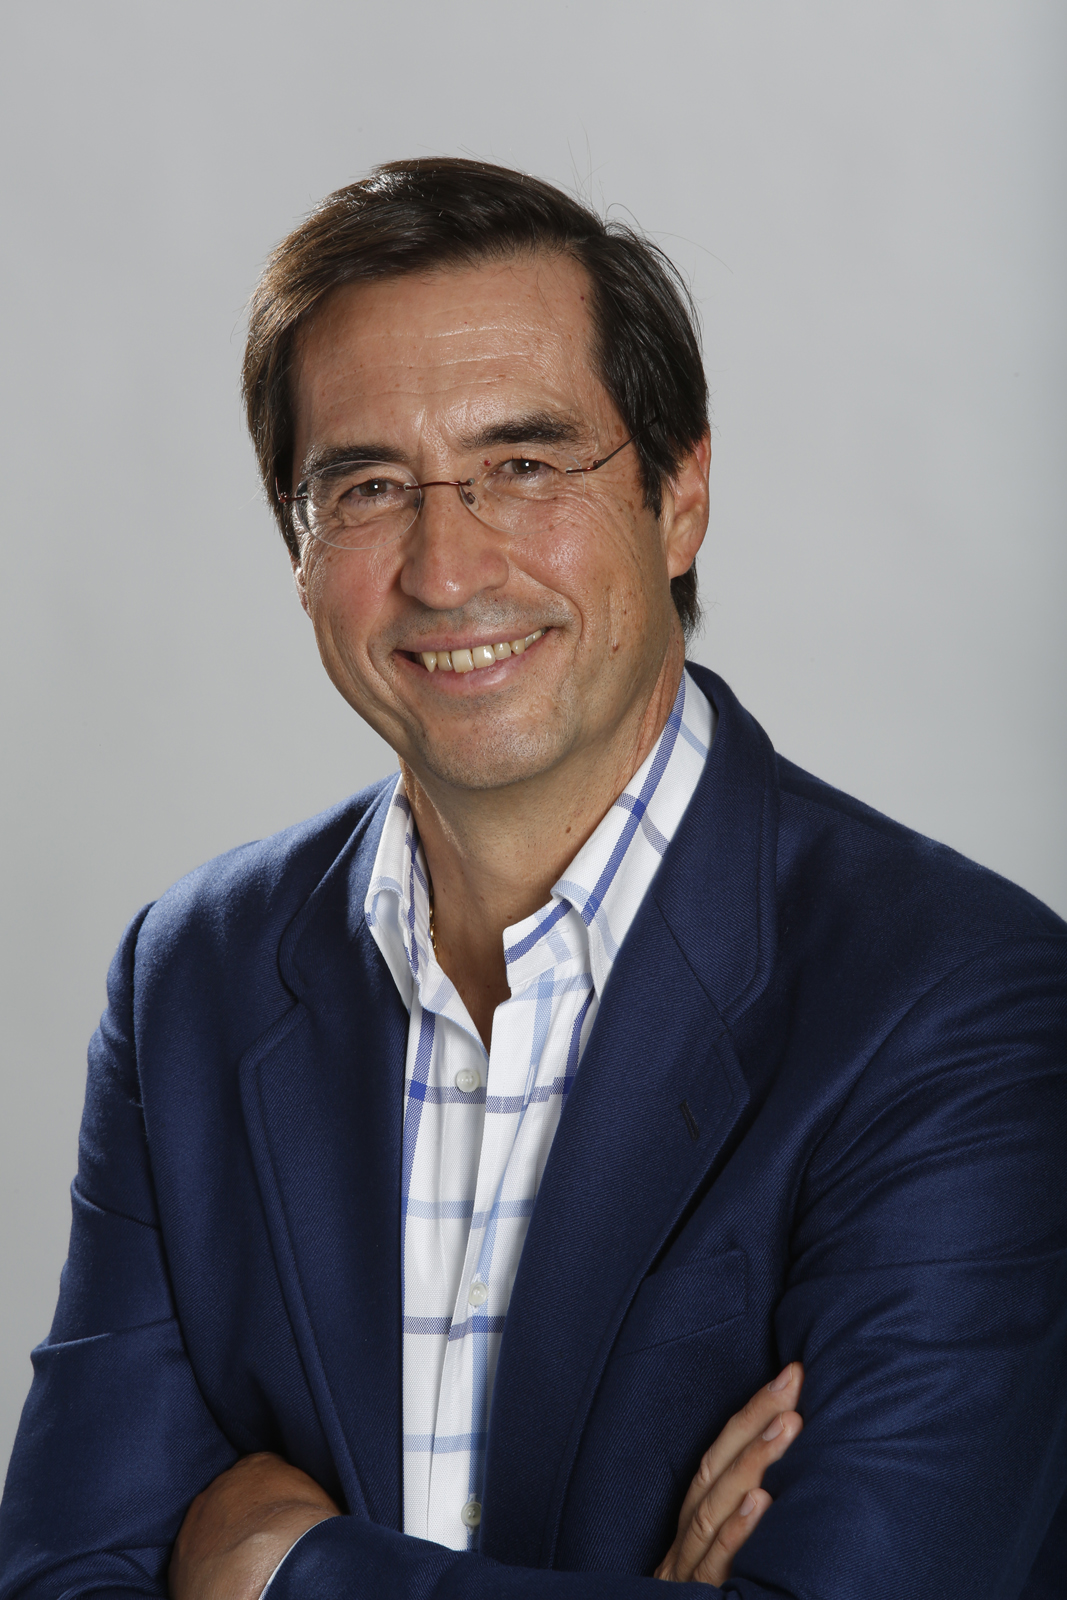 Doctor Mario Alonso Puig